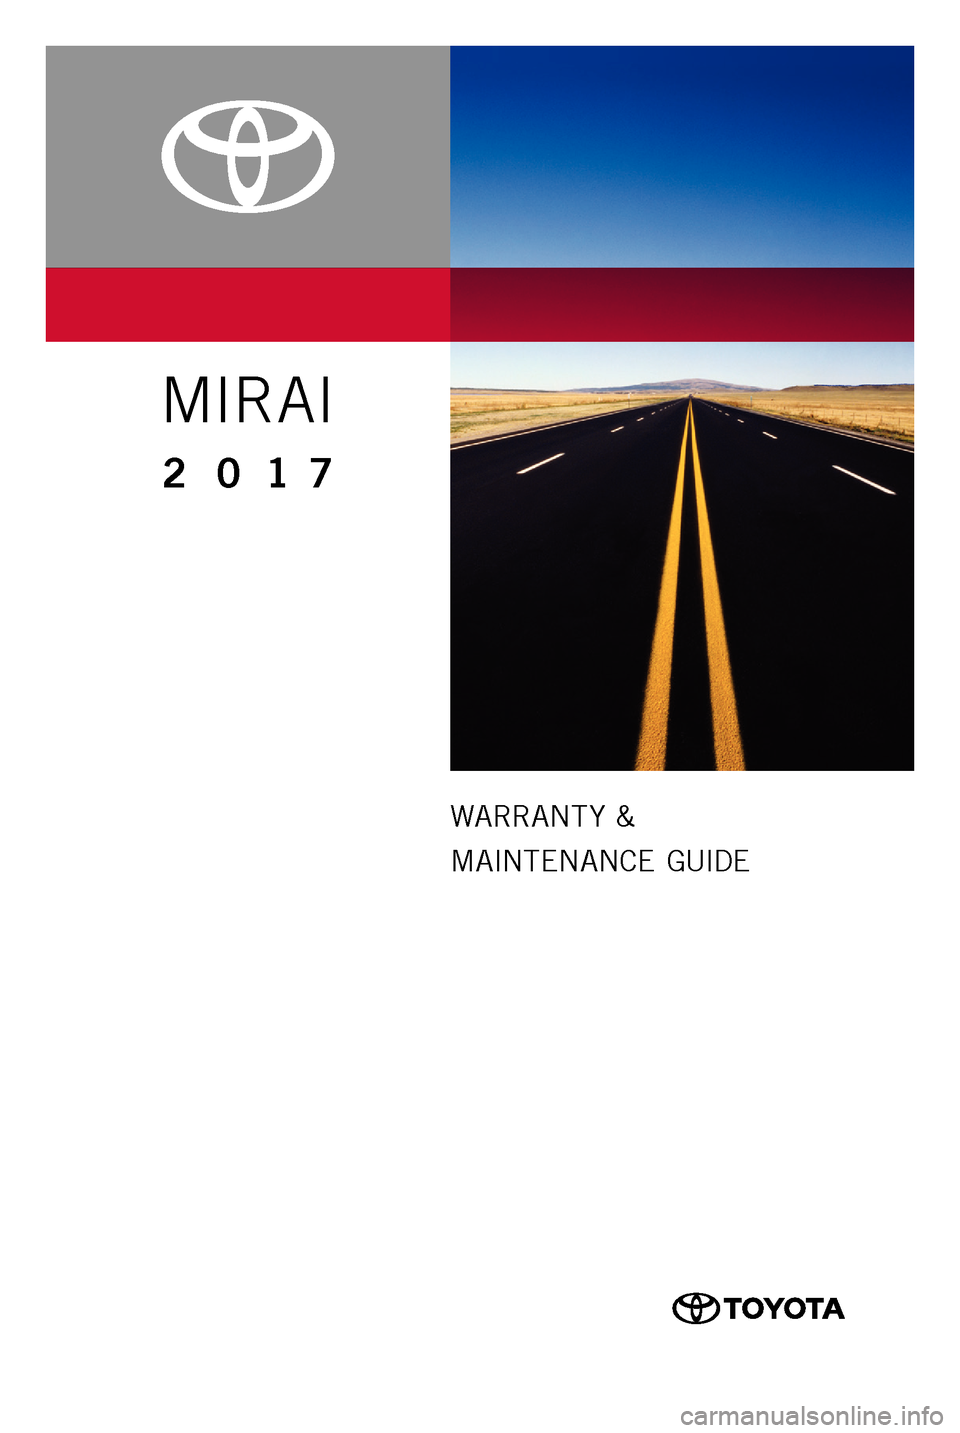 TOYOTA MIRAI 2017 1.G Warranty And Maintenance Guide WARRANT Y  &
MAINTENANCE GUIDE
www.toyota.com
Printed in U.S.A. 7/16
16-TCS-09409
MIRAI
2 0 17  